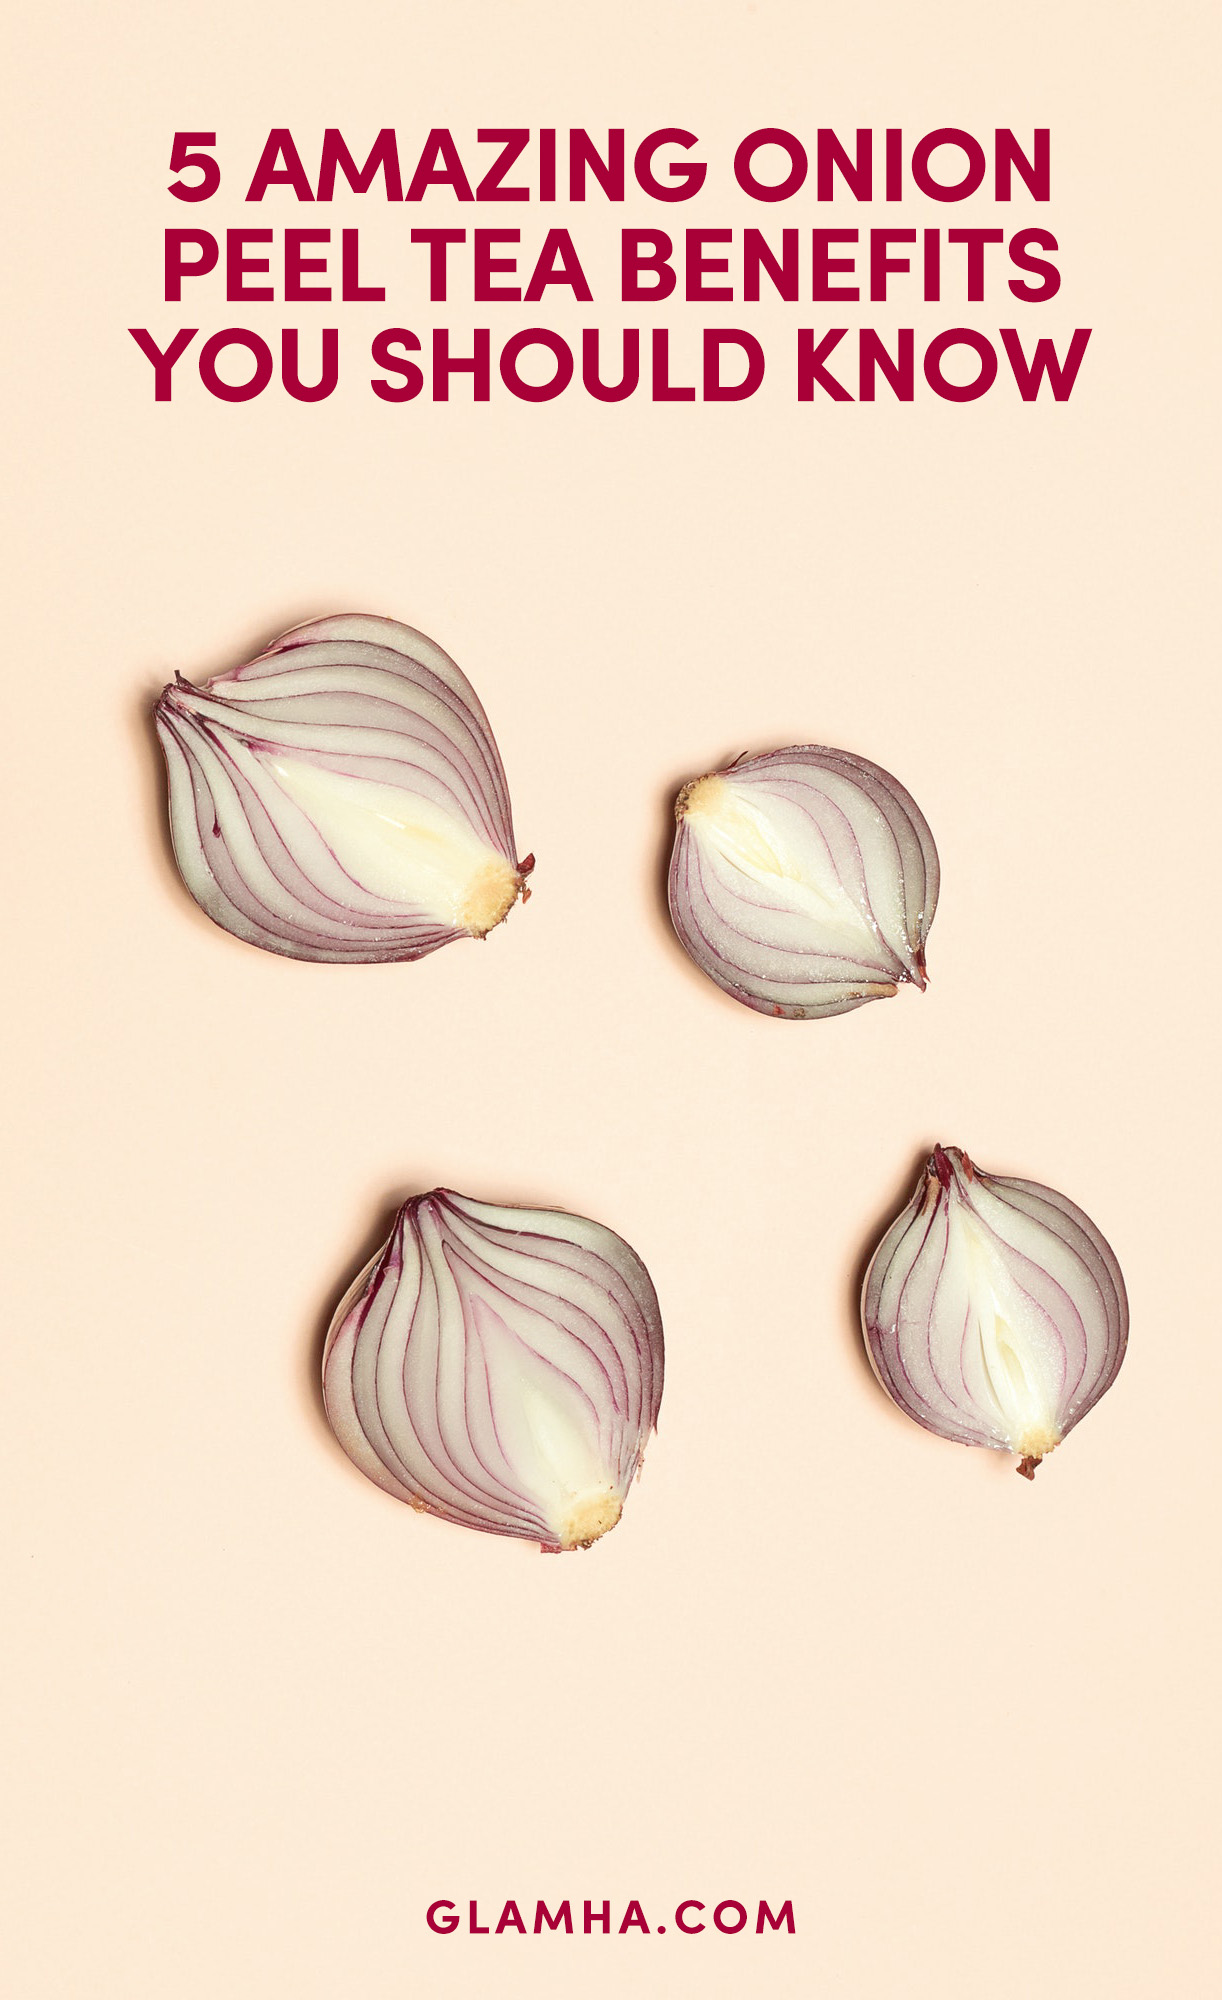 5 Amazing Onion Peel Tea Benefits You Should Know